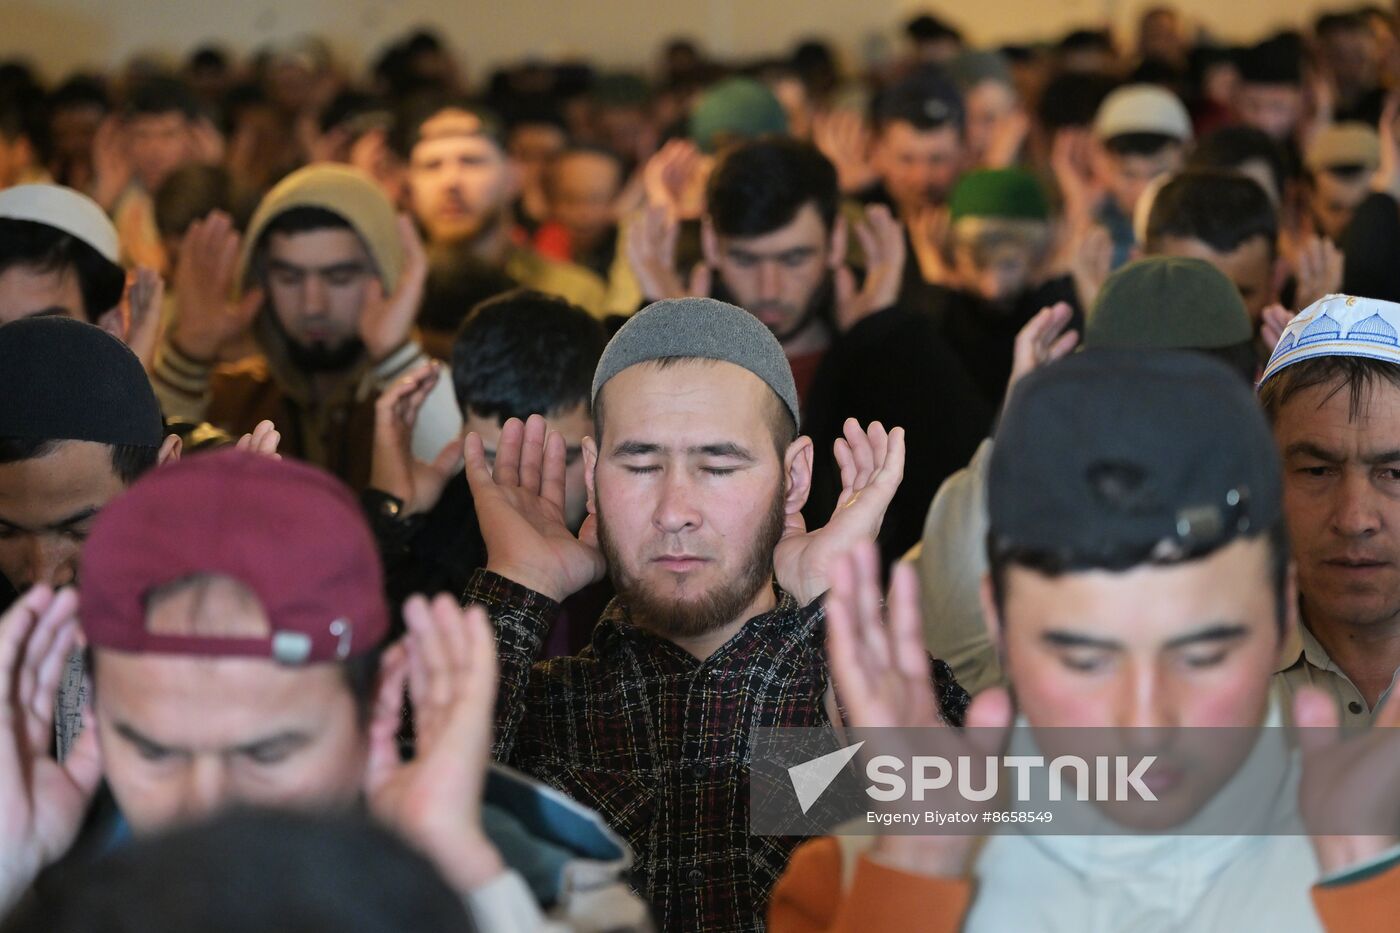 Russia Religion Eid al-Fitr